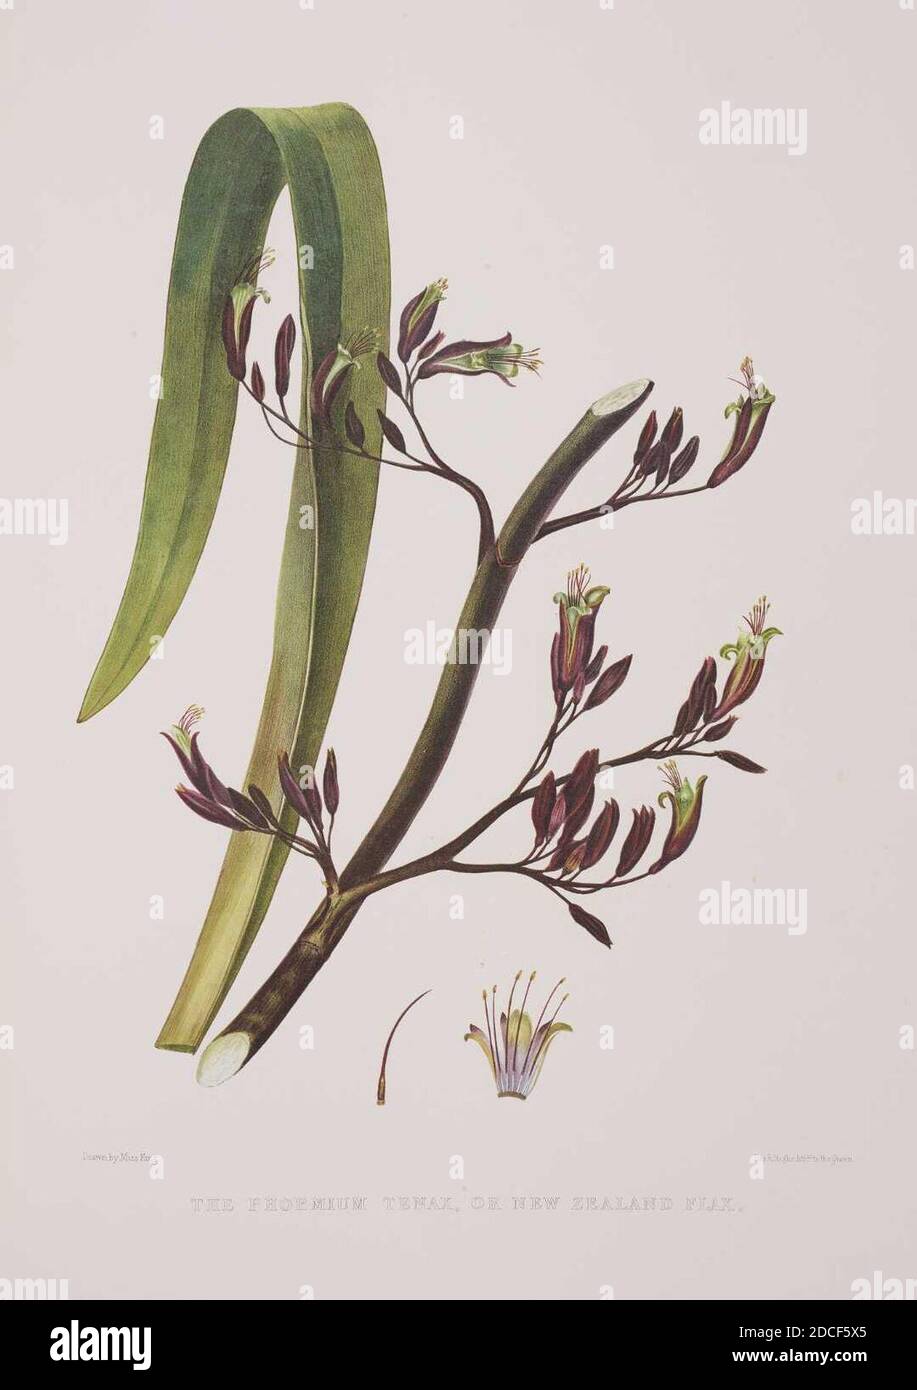 King, Martha The phormium tenax, or New Zealand flax. Stock Photo